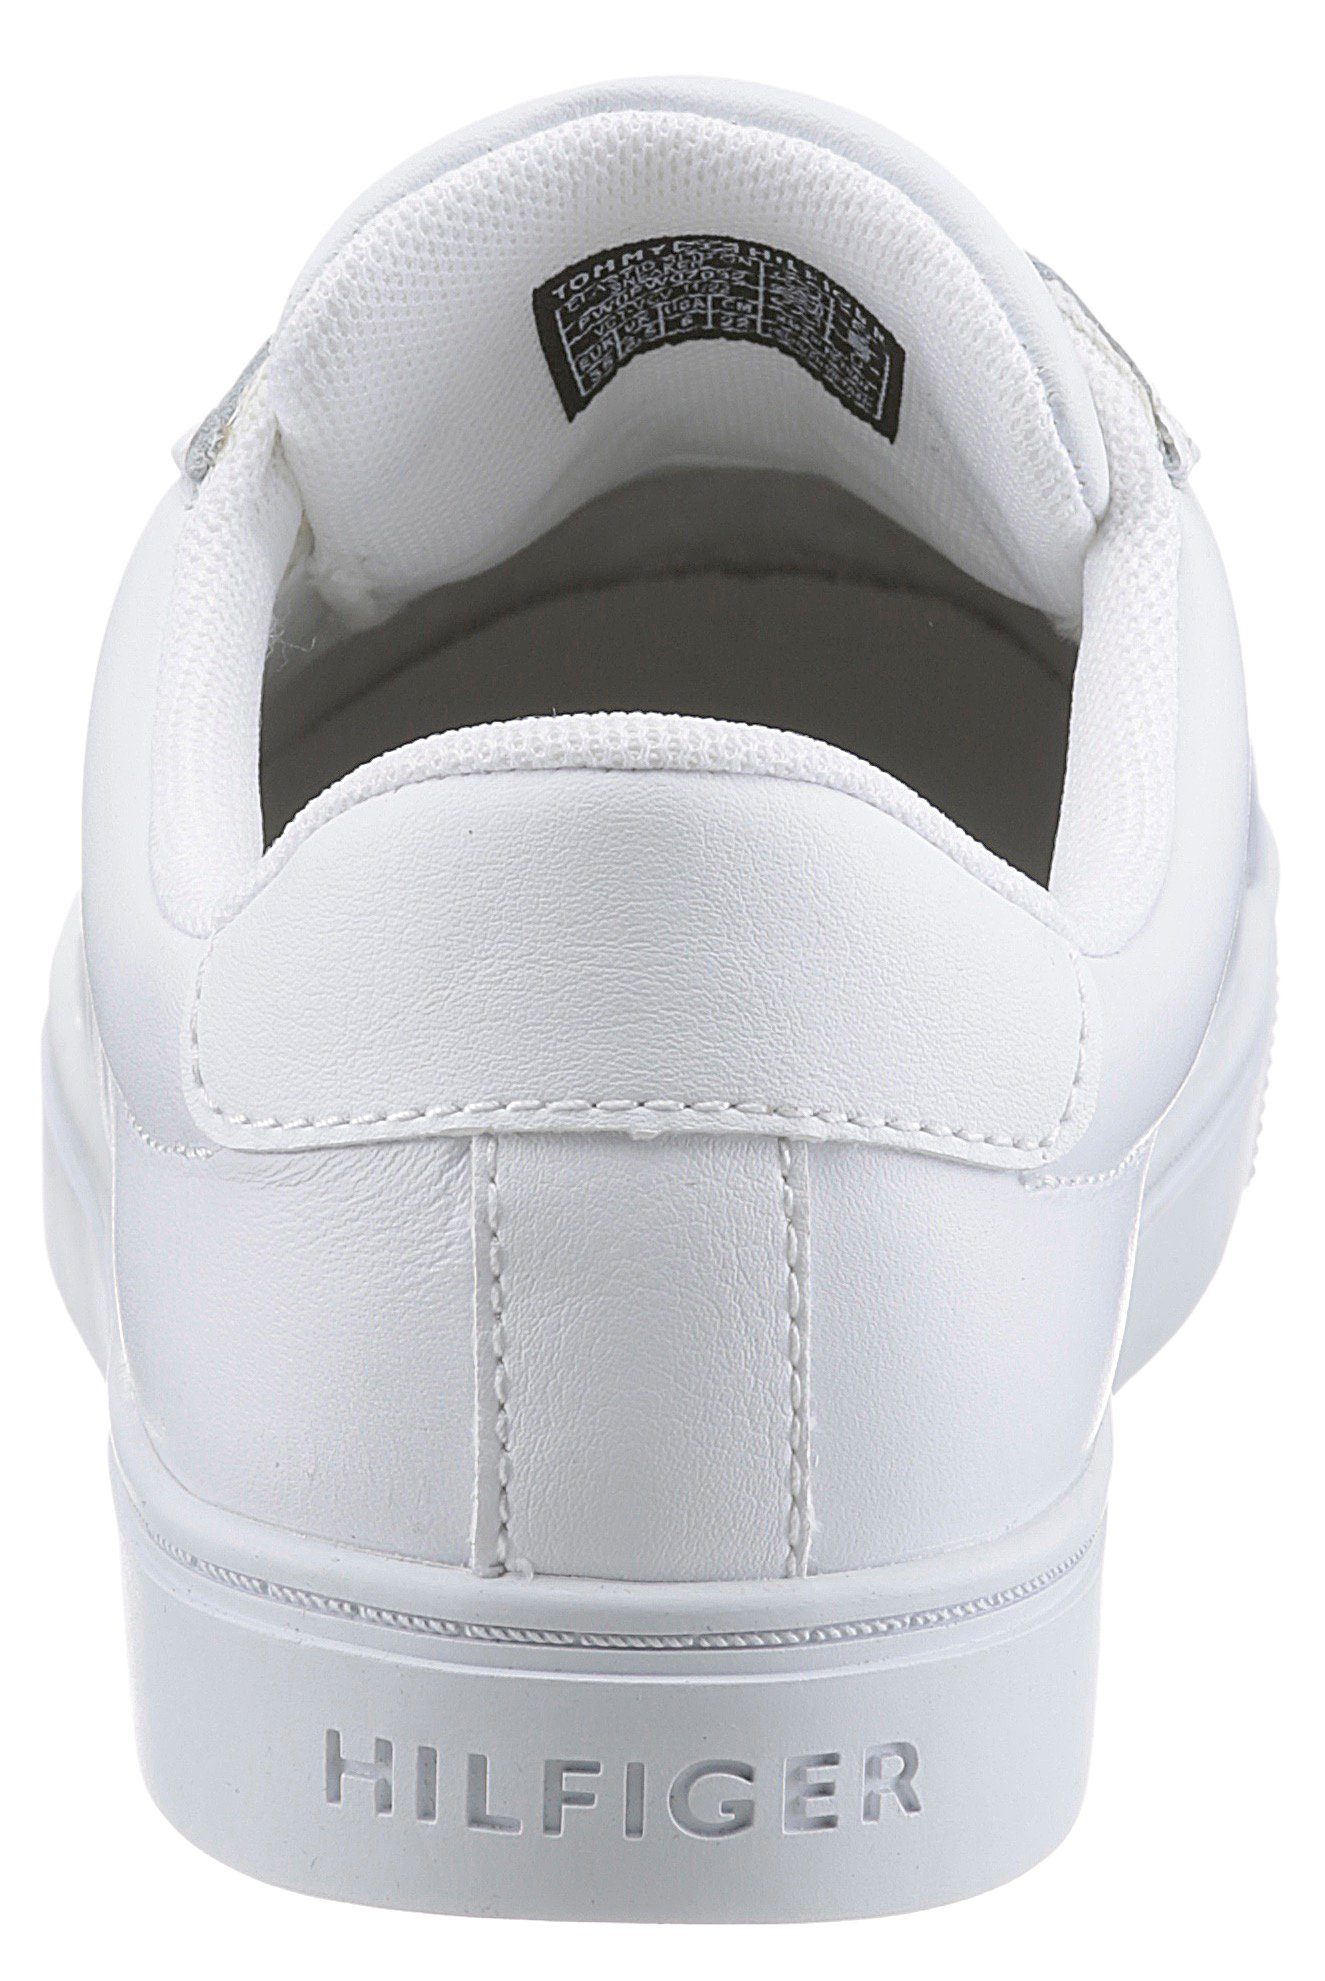 Gummizug Slip-On Hilfiger ON Sneaker weiß breitem SNEAKER SLIP mit Tommy ELASTIC